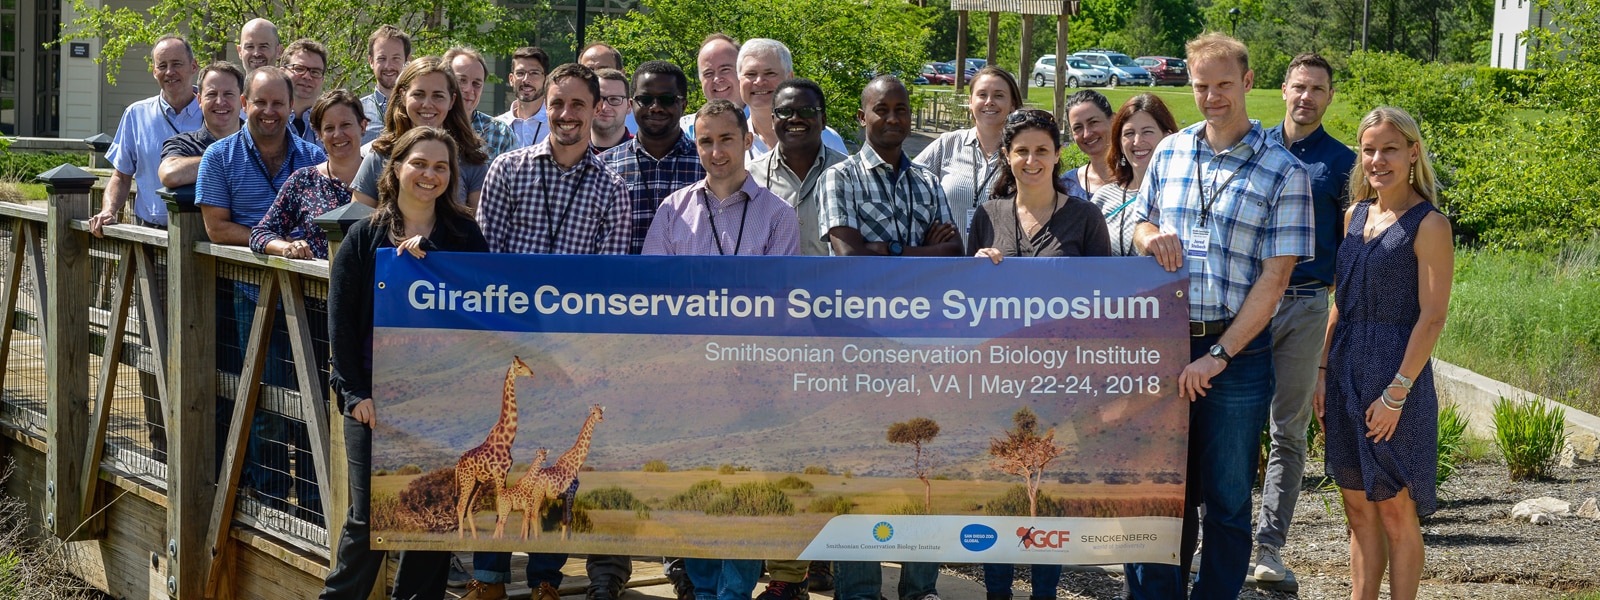 Giraffe Conservation Science Symposium